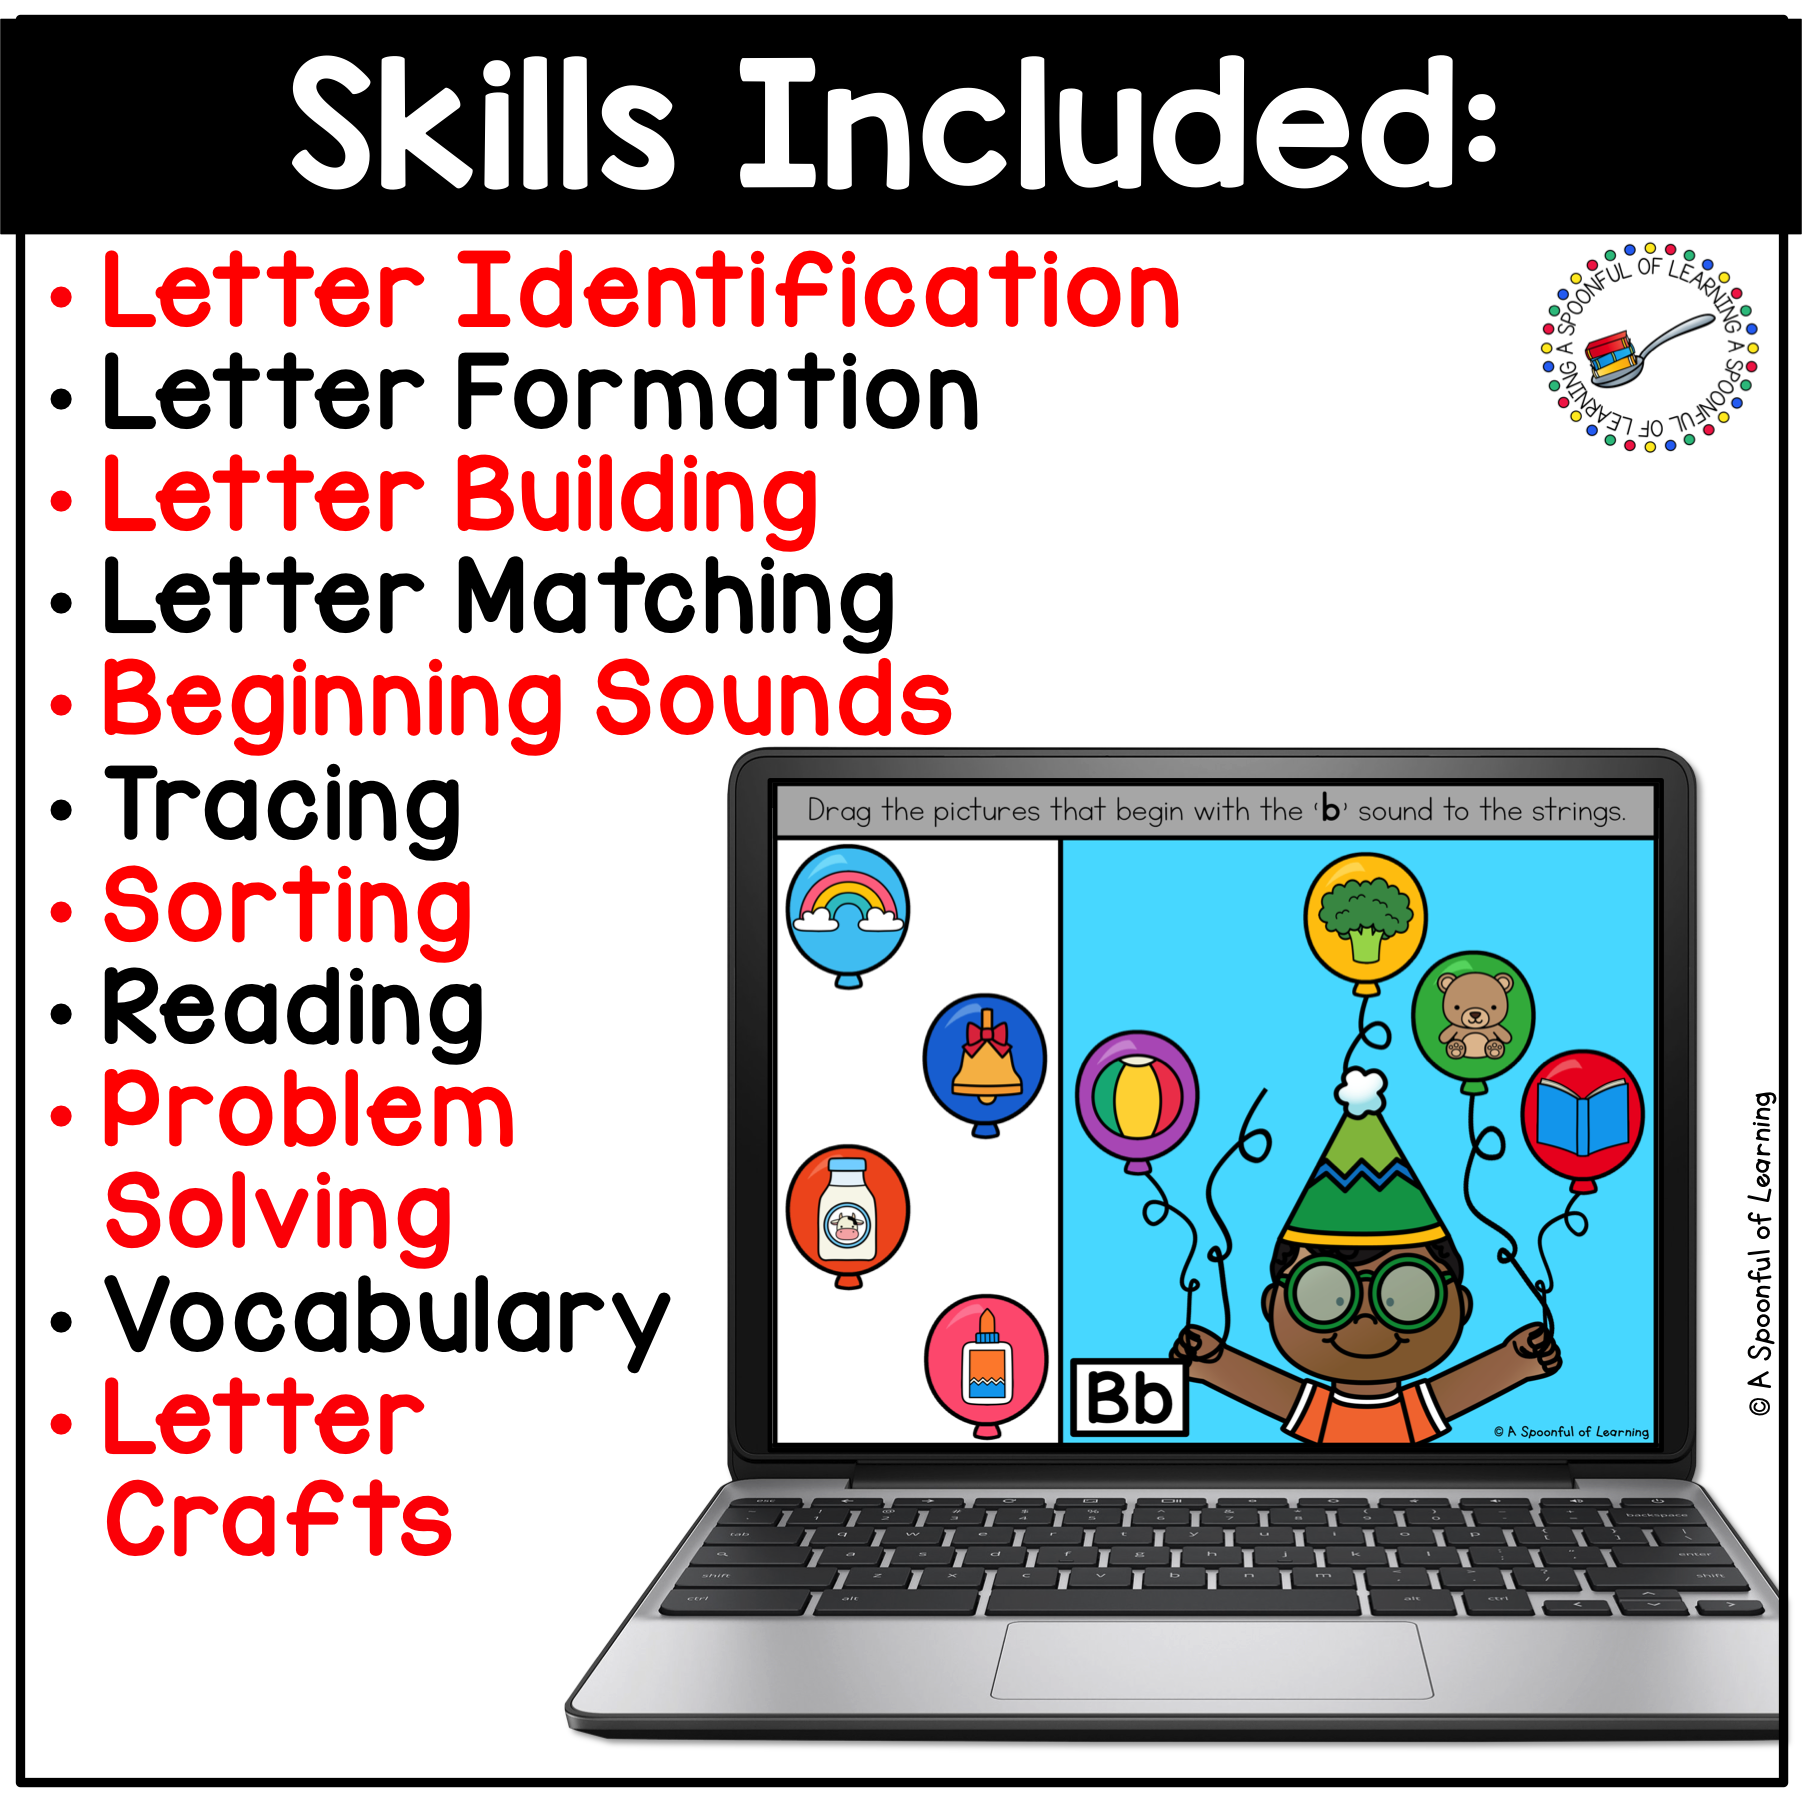 FREE Digital Game - Alphabet, Digital Literacy Centers